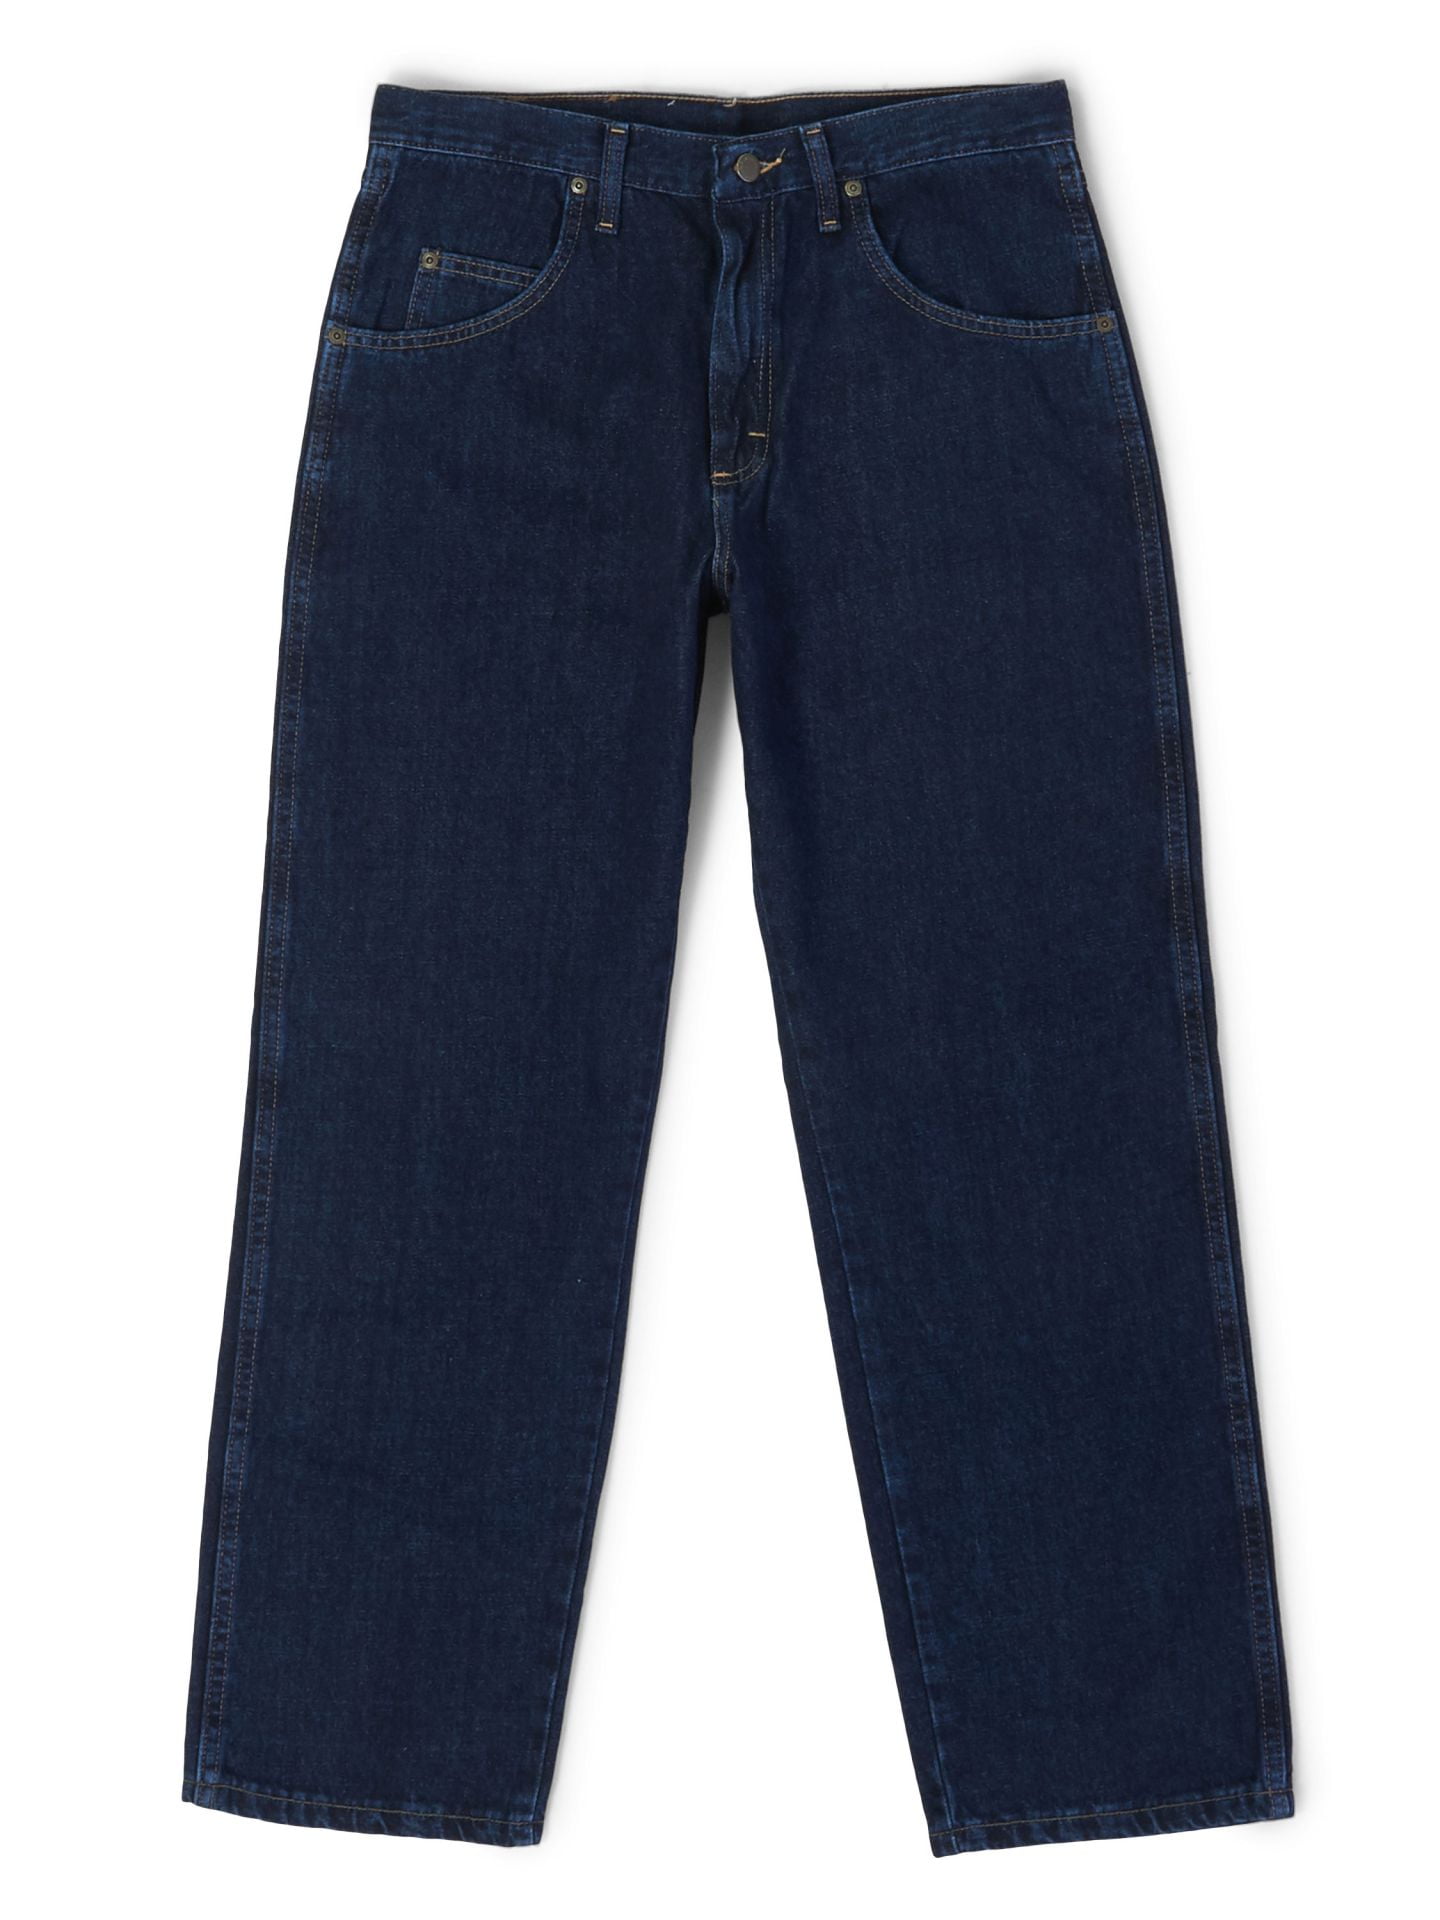 wrangler performance jeans walmart